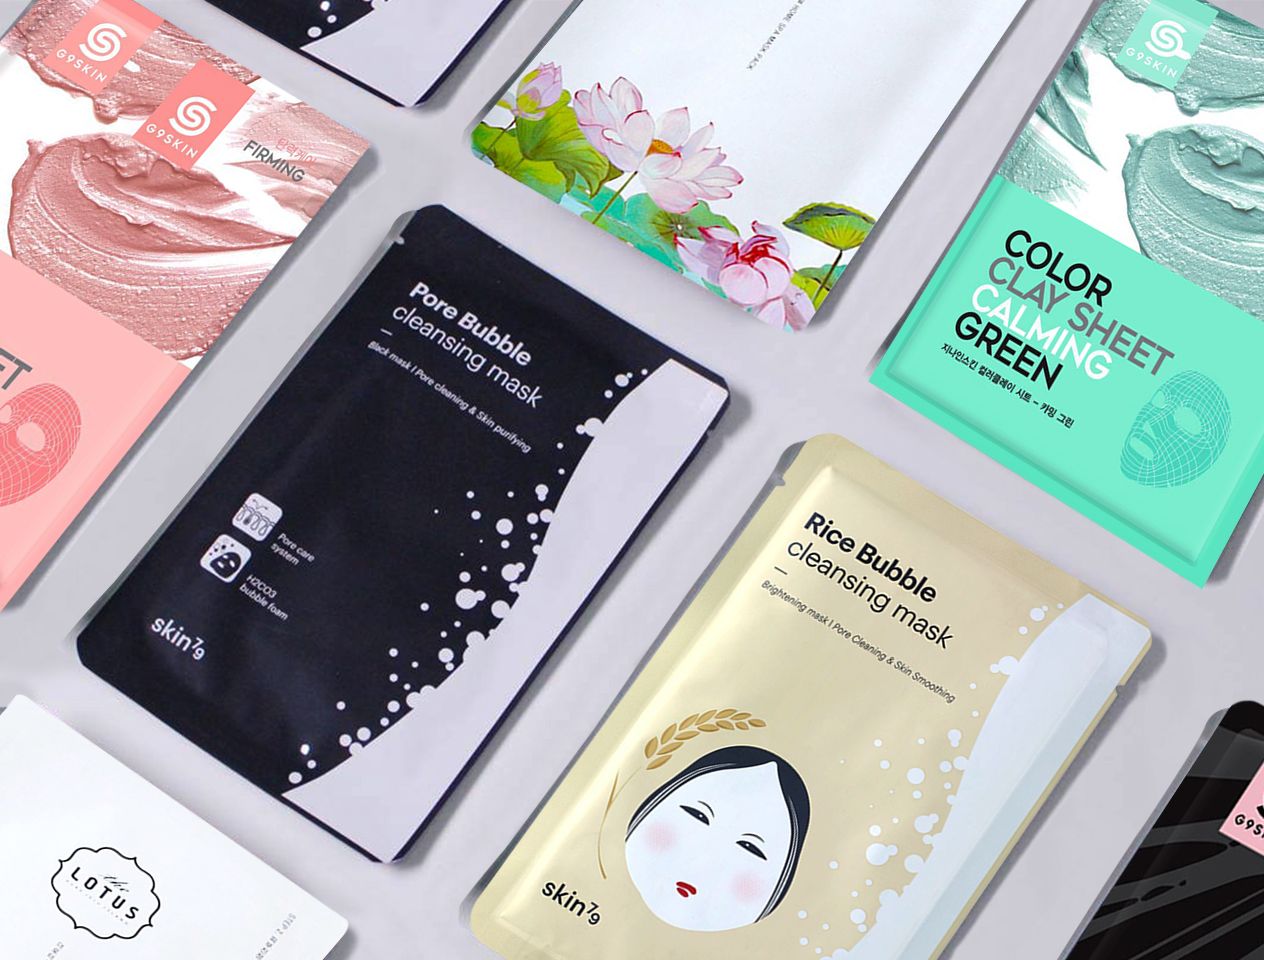 Why beauty editors love Korean skincare